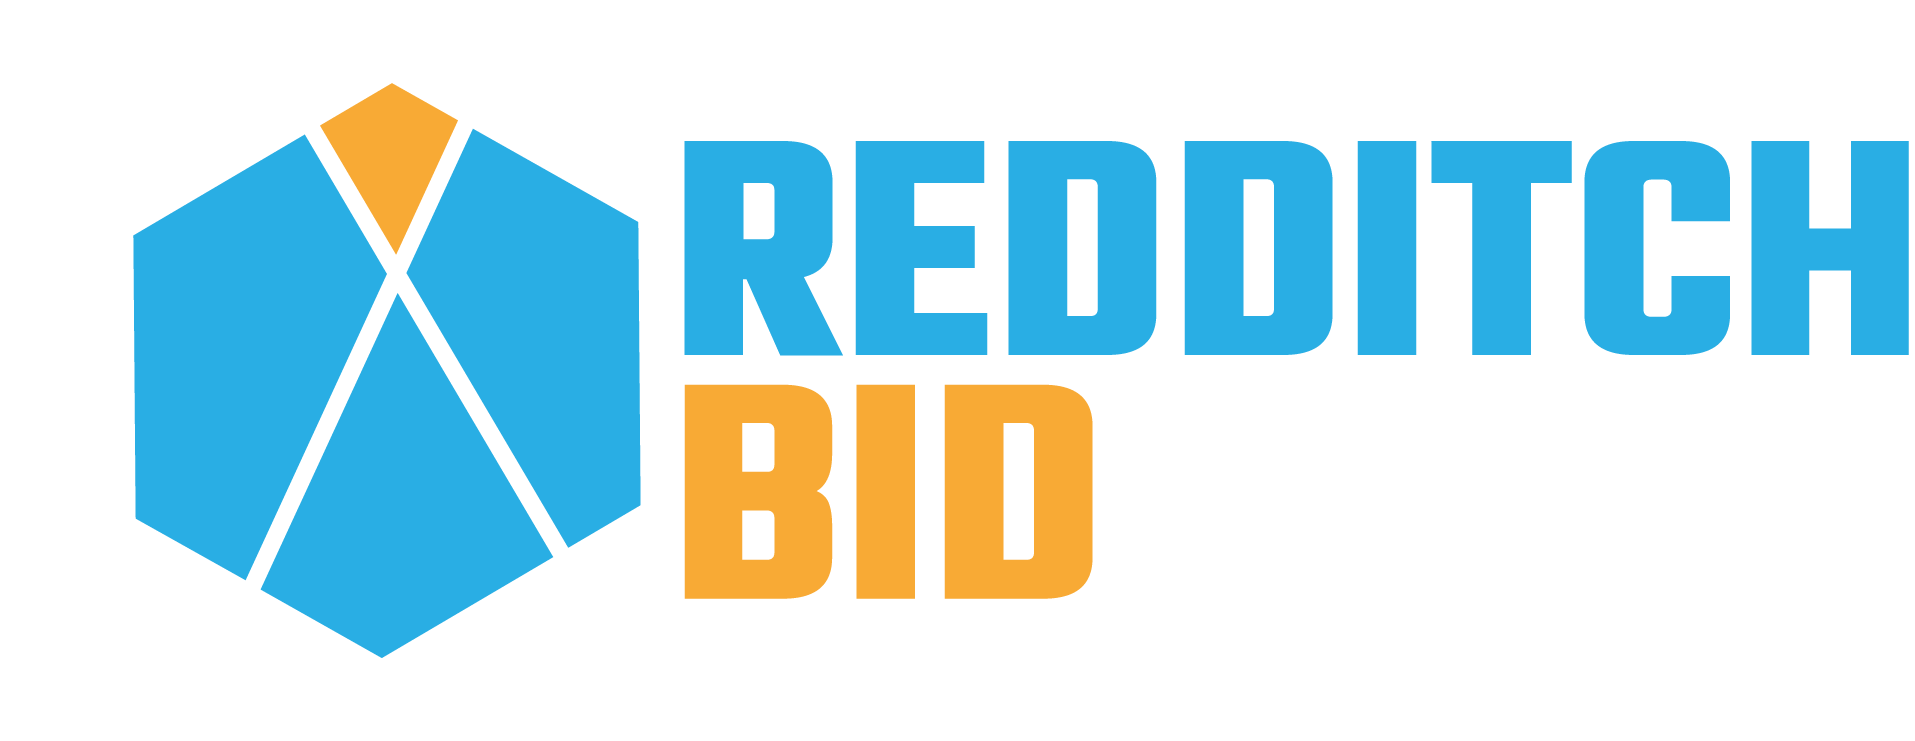 Redditch BID